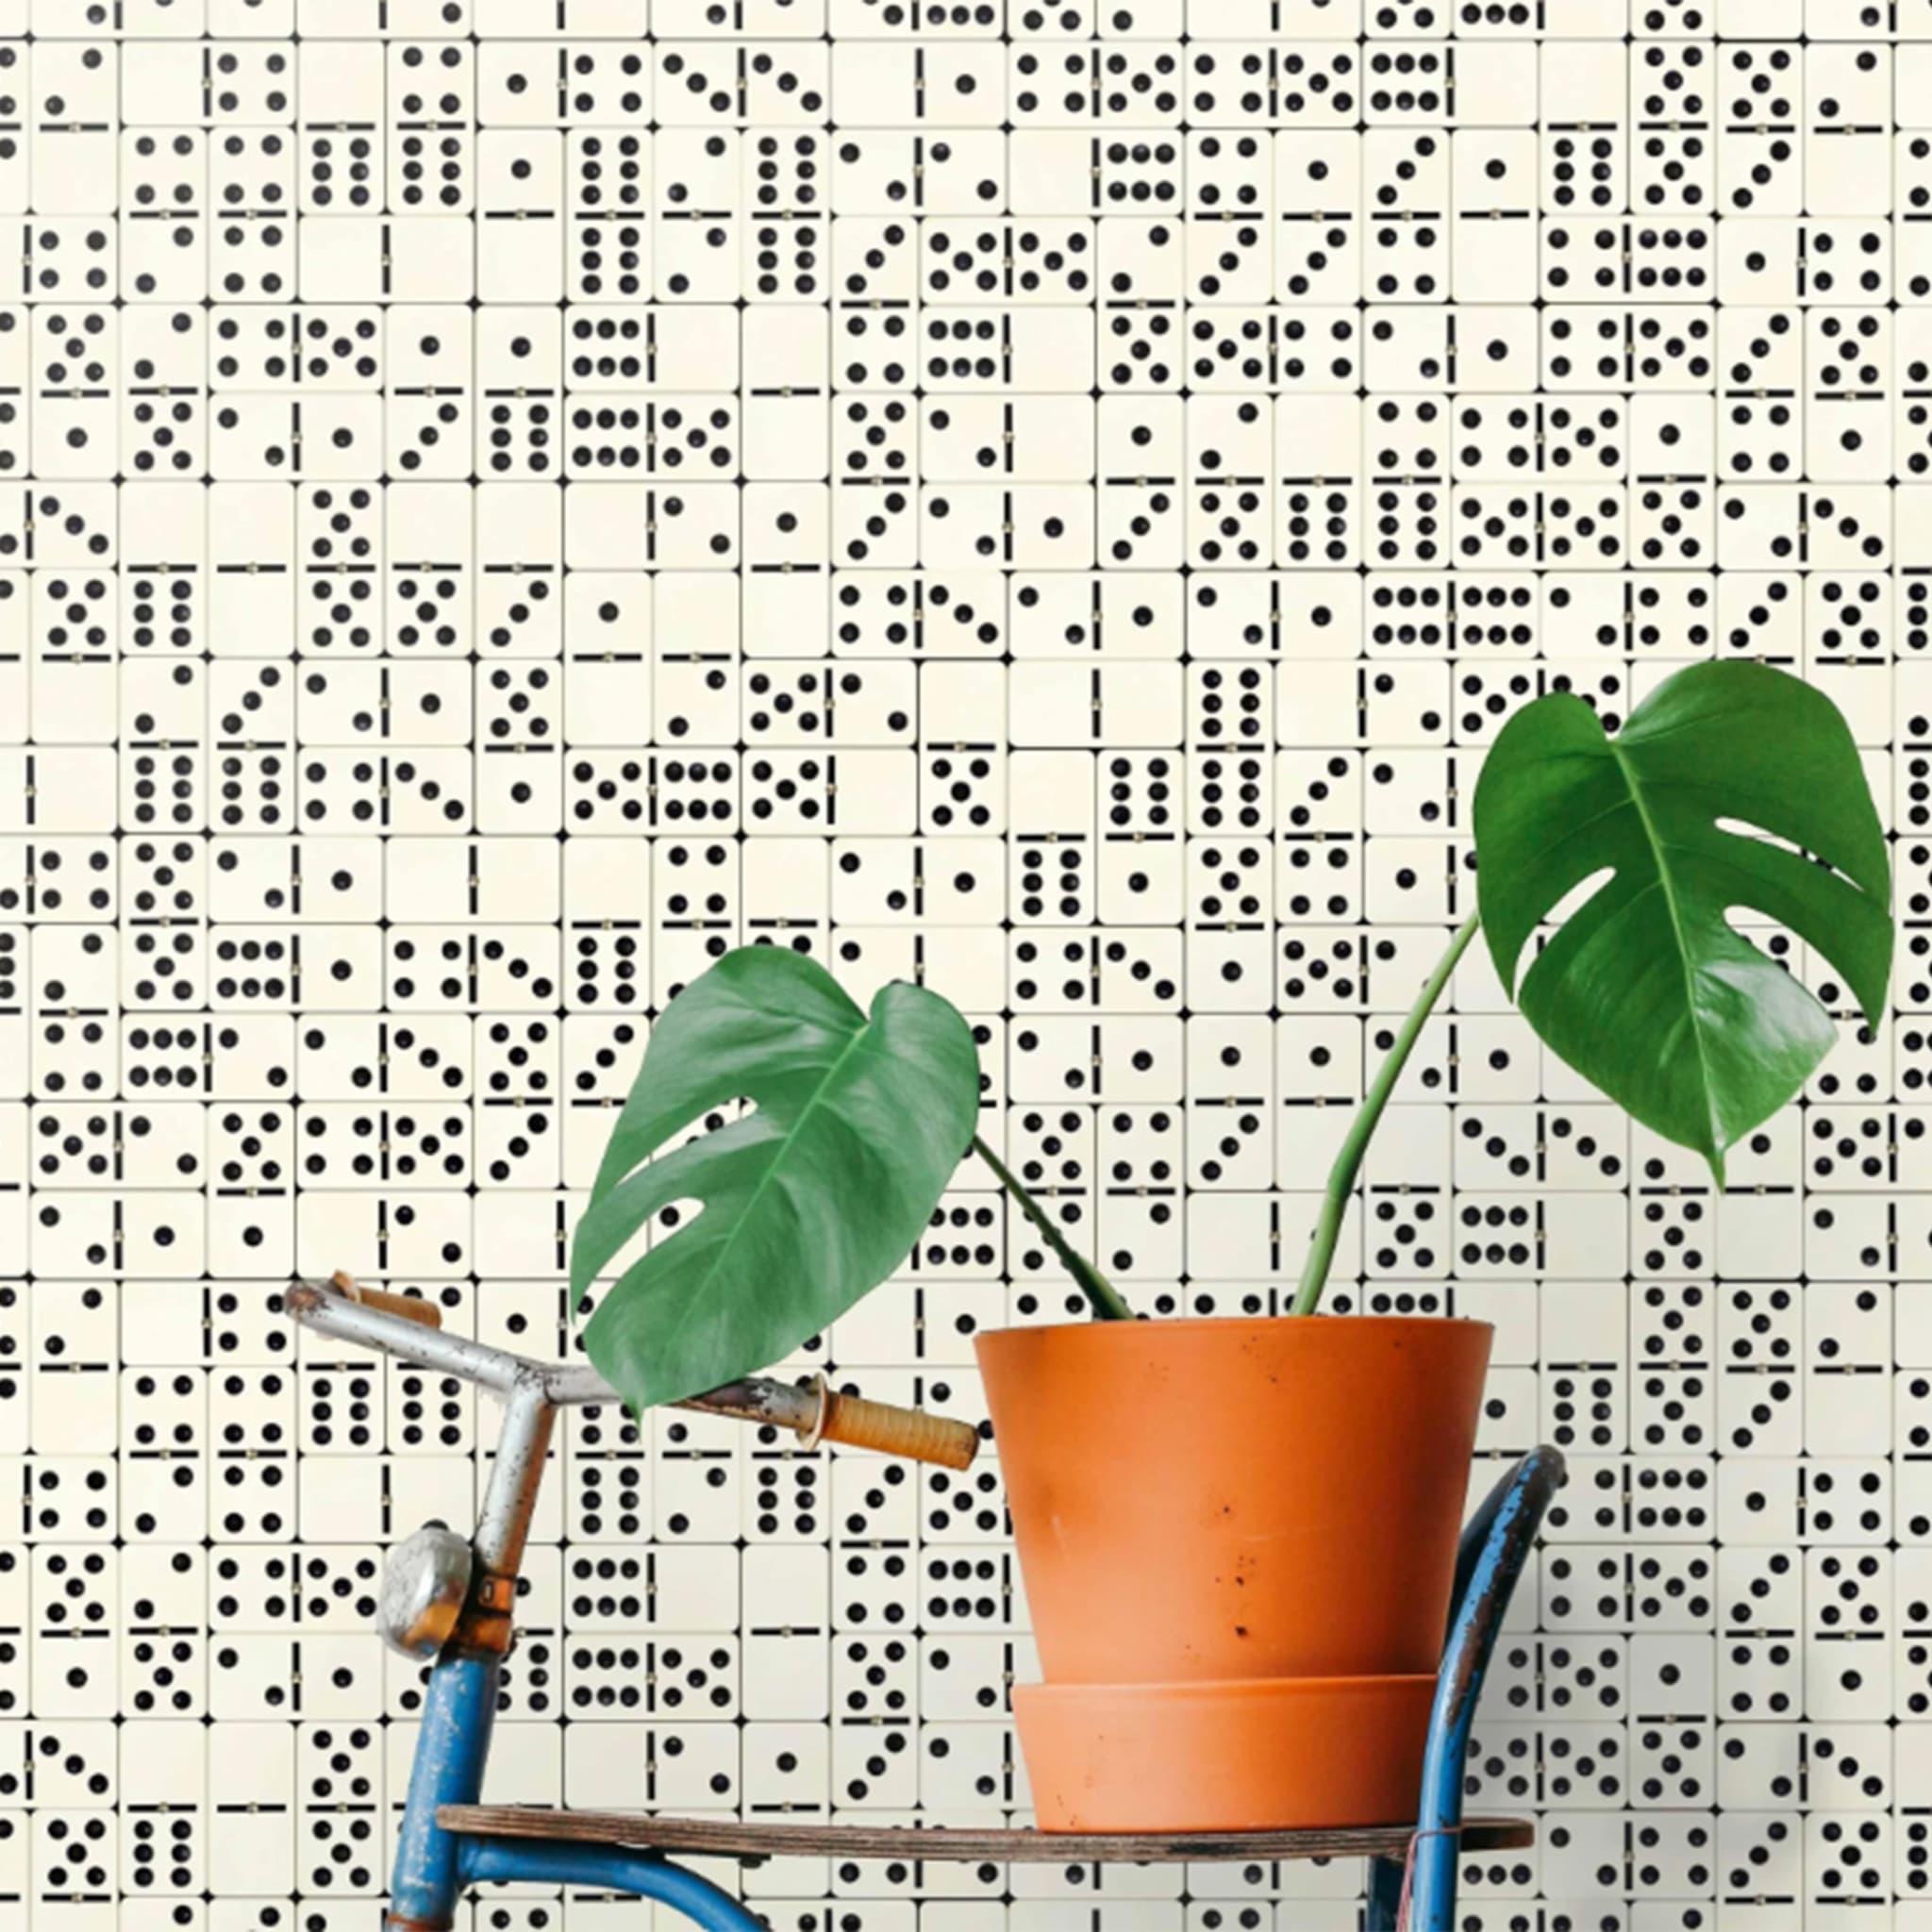 Playful Domino Tile Pattern Wallpaper - Alternative view 1